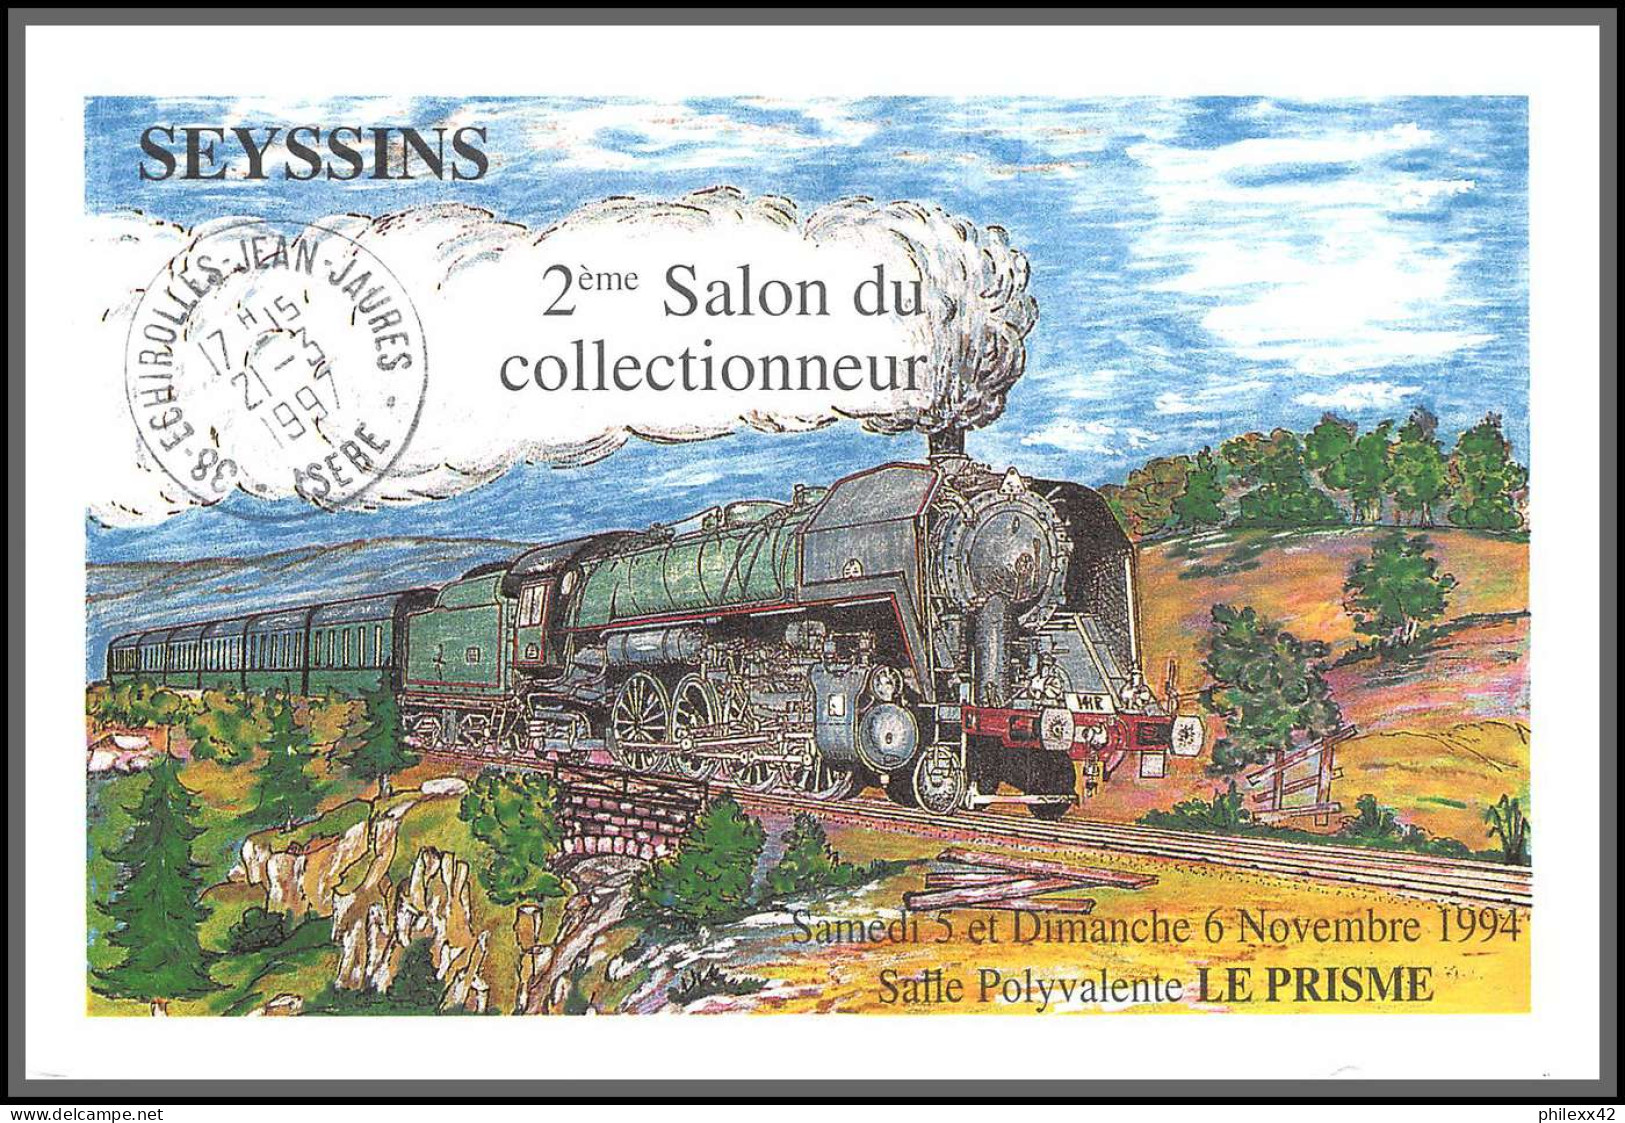 74321 Mixte Atm Briat 17/3/1997 Combani Mayotte Echirolles Isère France Carte Postcard Colonies  - Briefe U. Dokumente